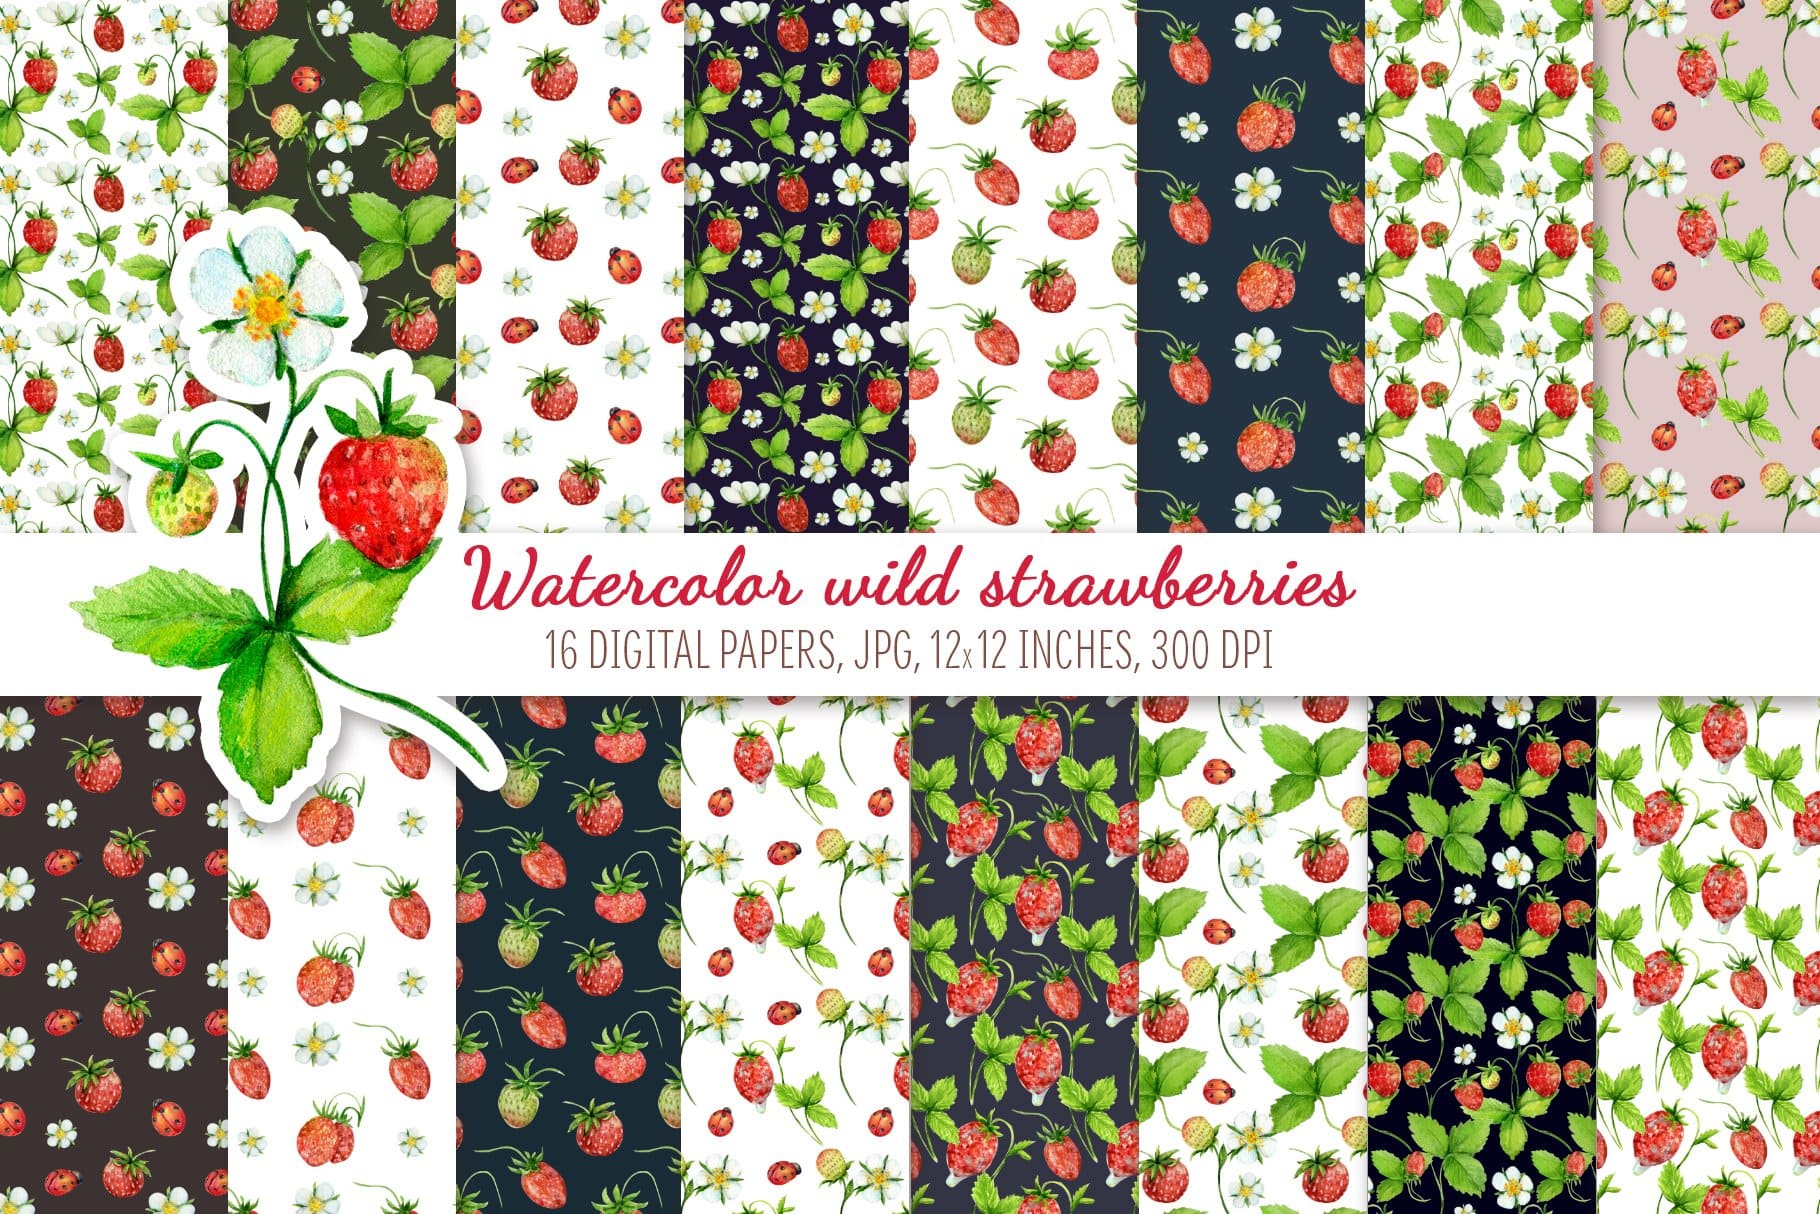 Watercolor Wild Strawberries. Digital Paper Pack.